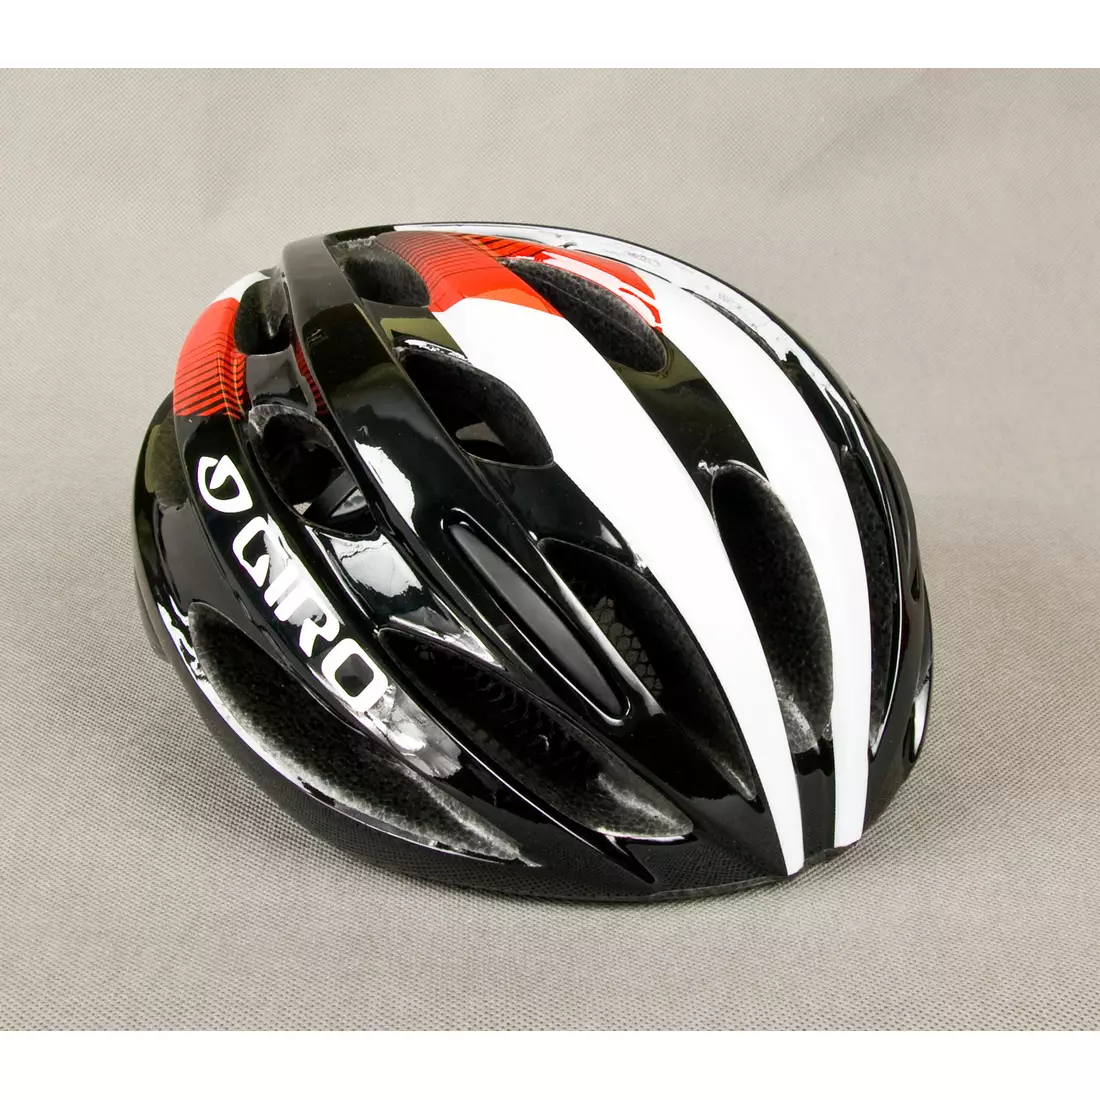 GIRO TRINITY bicycle helmet, black and red